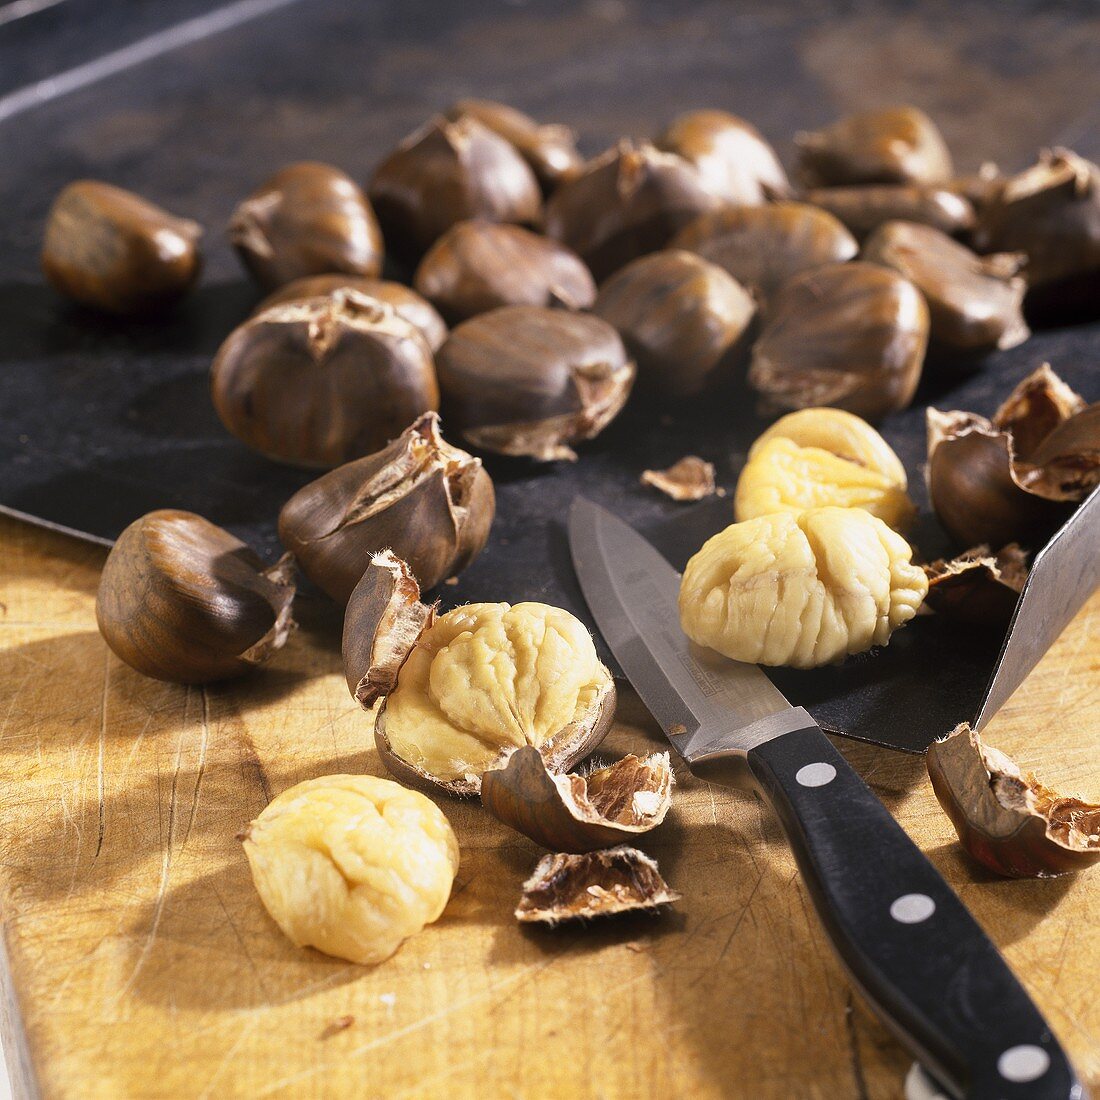 Sweet chestnuts (Castanea sativa), roasted